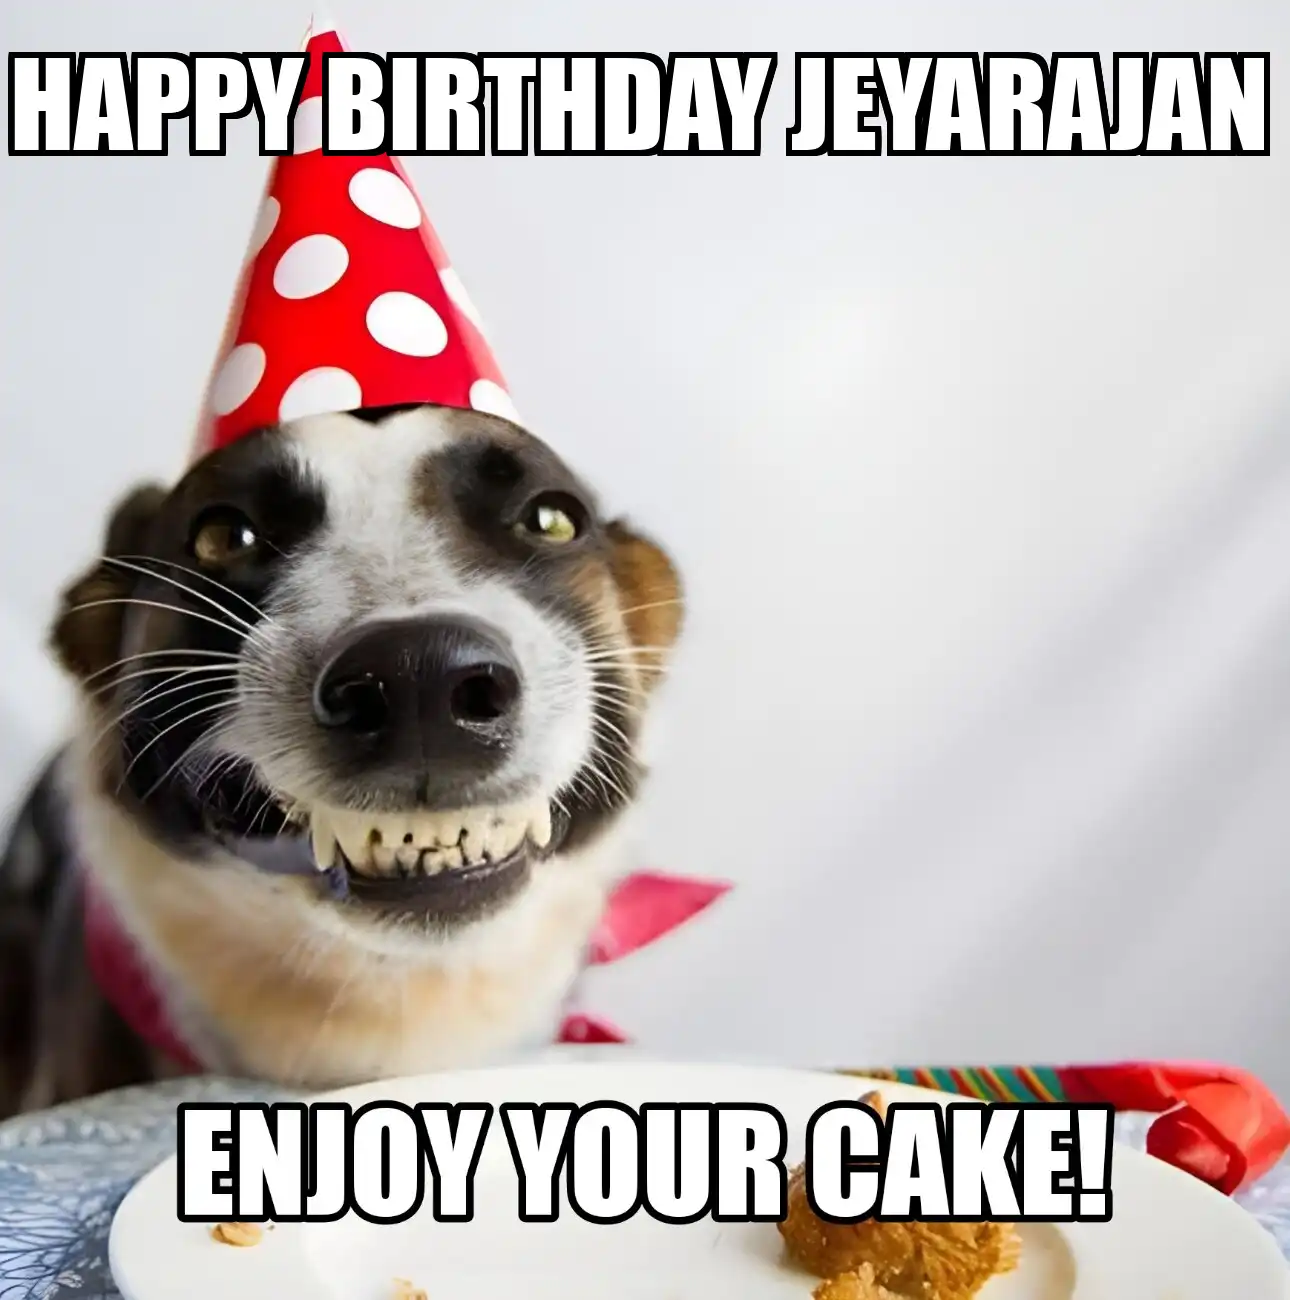 Happy Birthday Jeyarajan Enjoy Your Cake Dog Meme